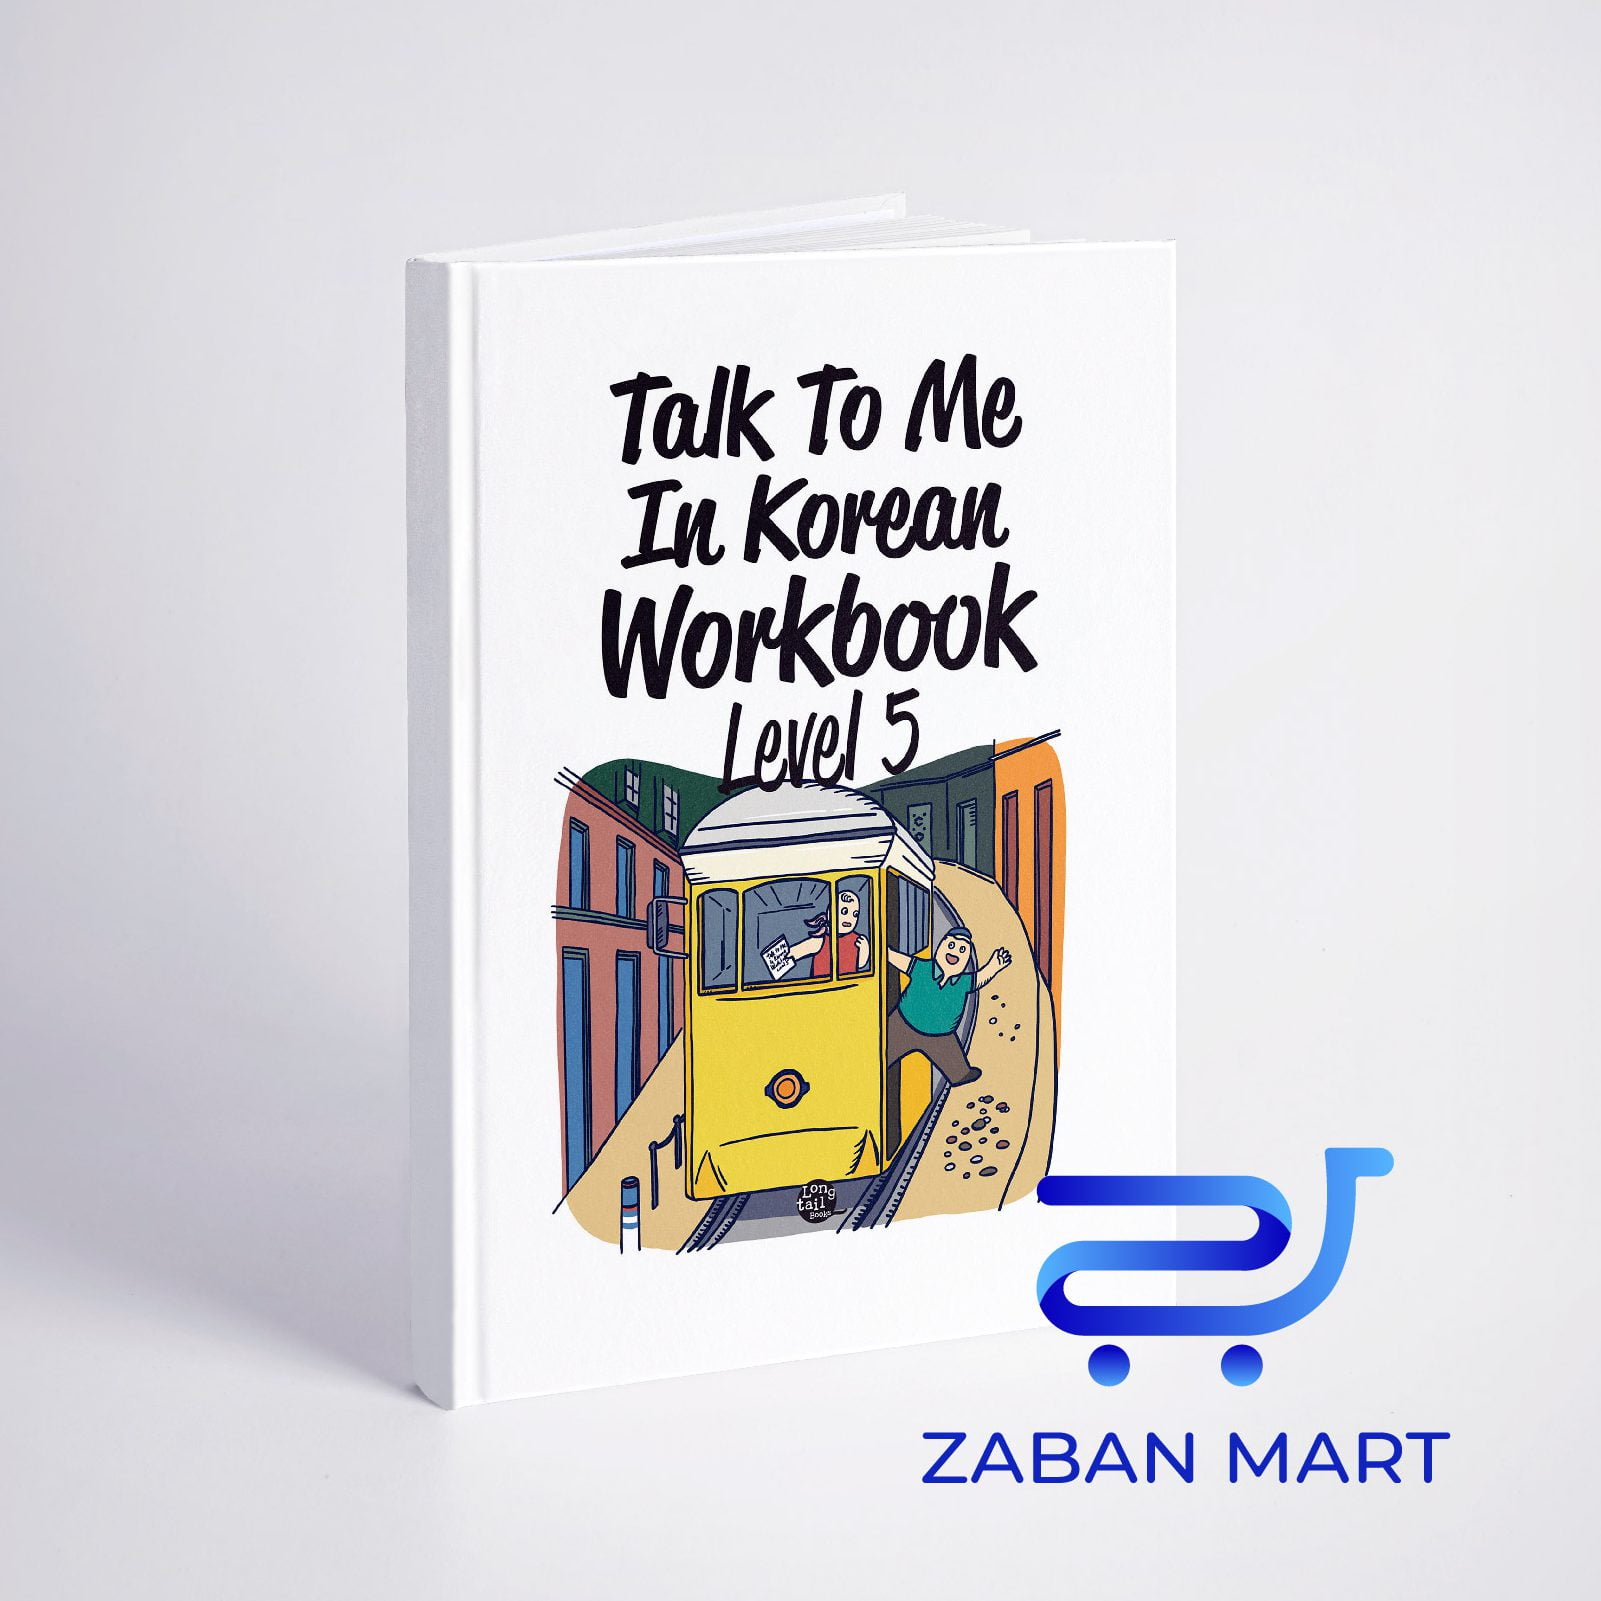 کتاب ورک بوک تاک تو می کرین جلد پنج Talk To Me In Korean Workbook Level 5